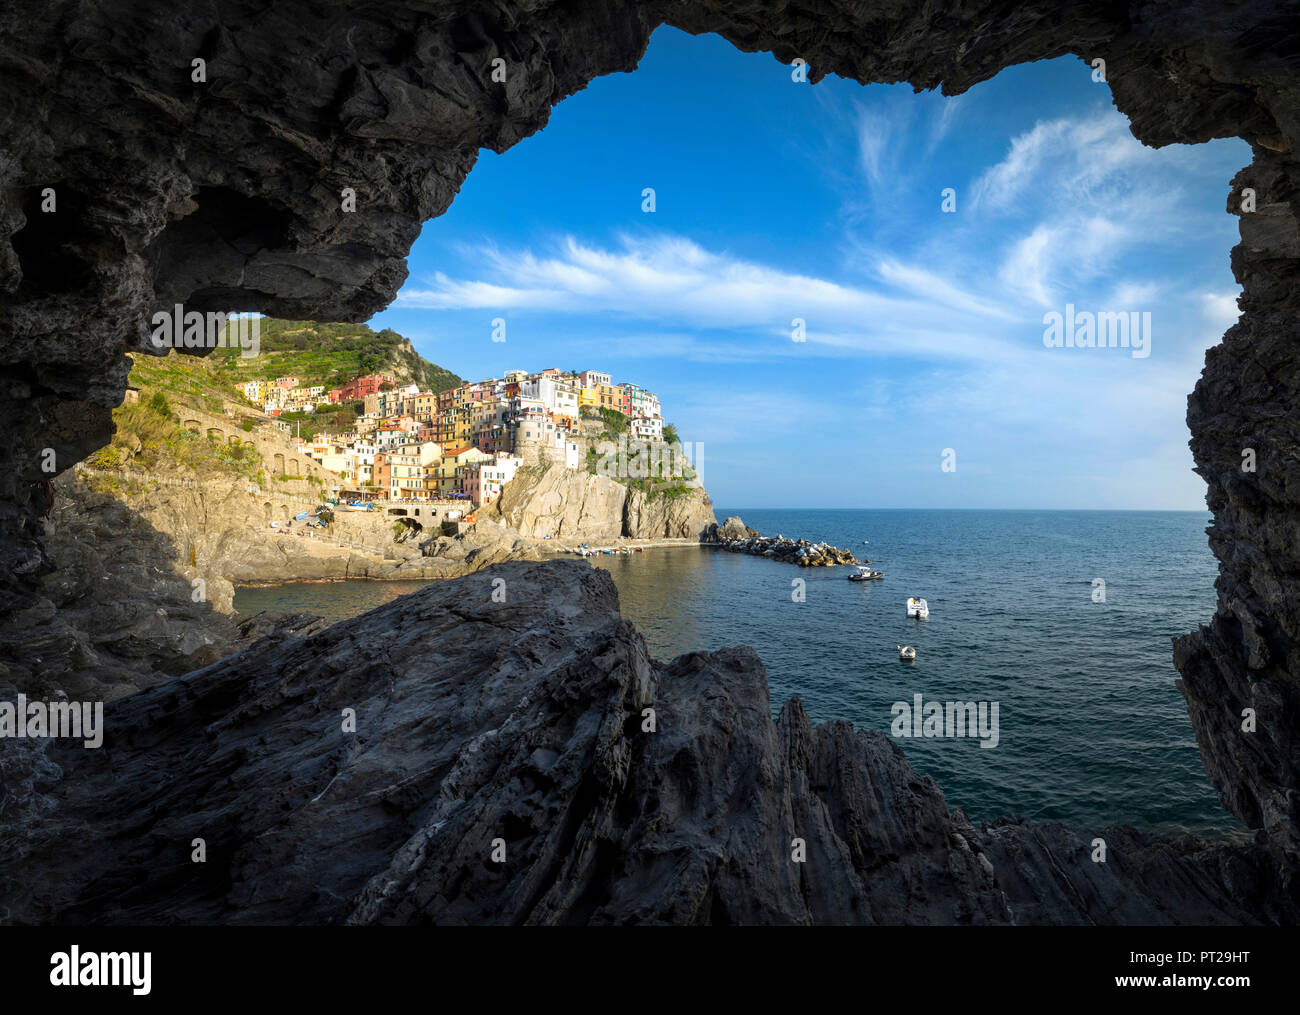 Manarola village, view from grotto, La Spezia district, Liguria, Italy Stock Photo